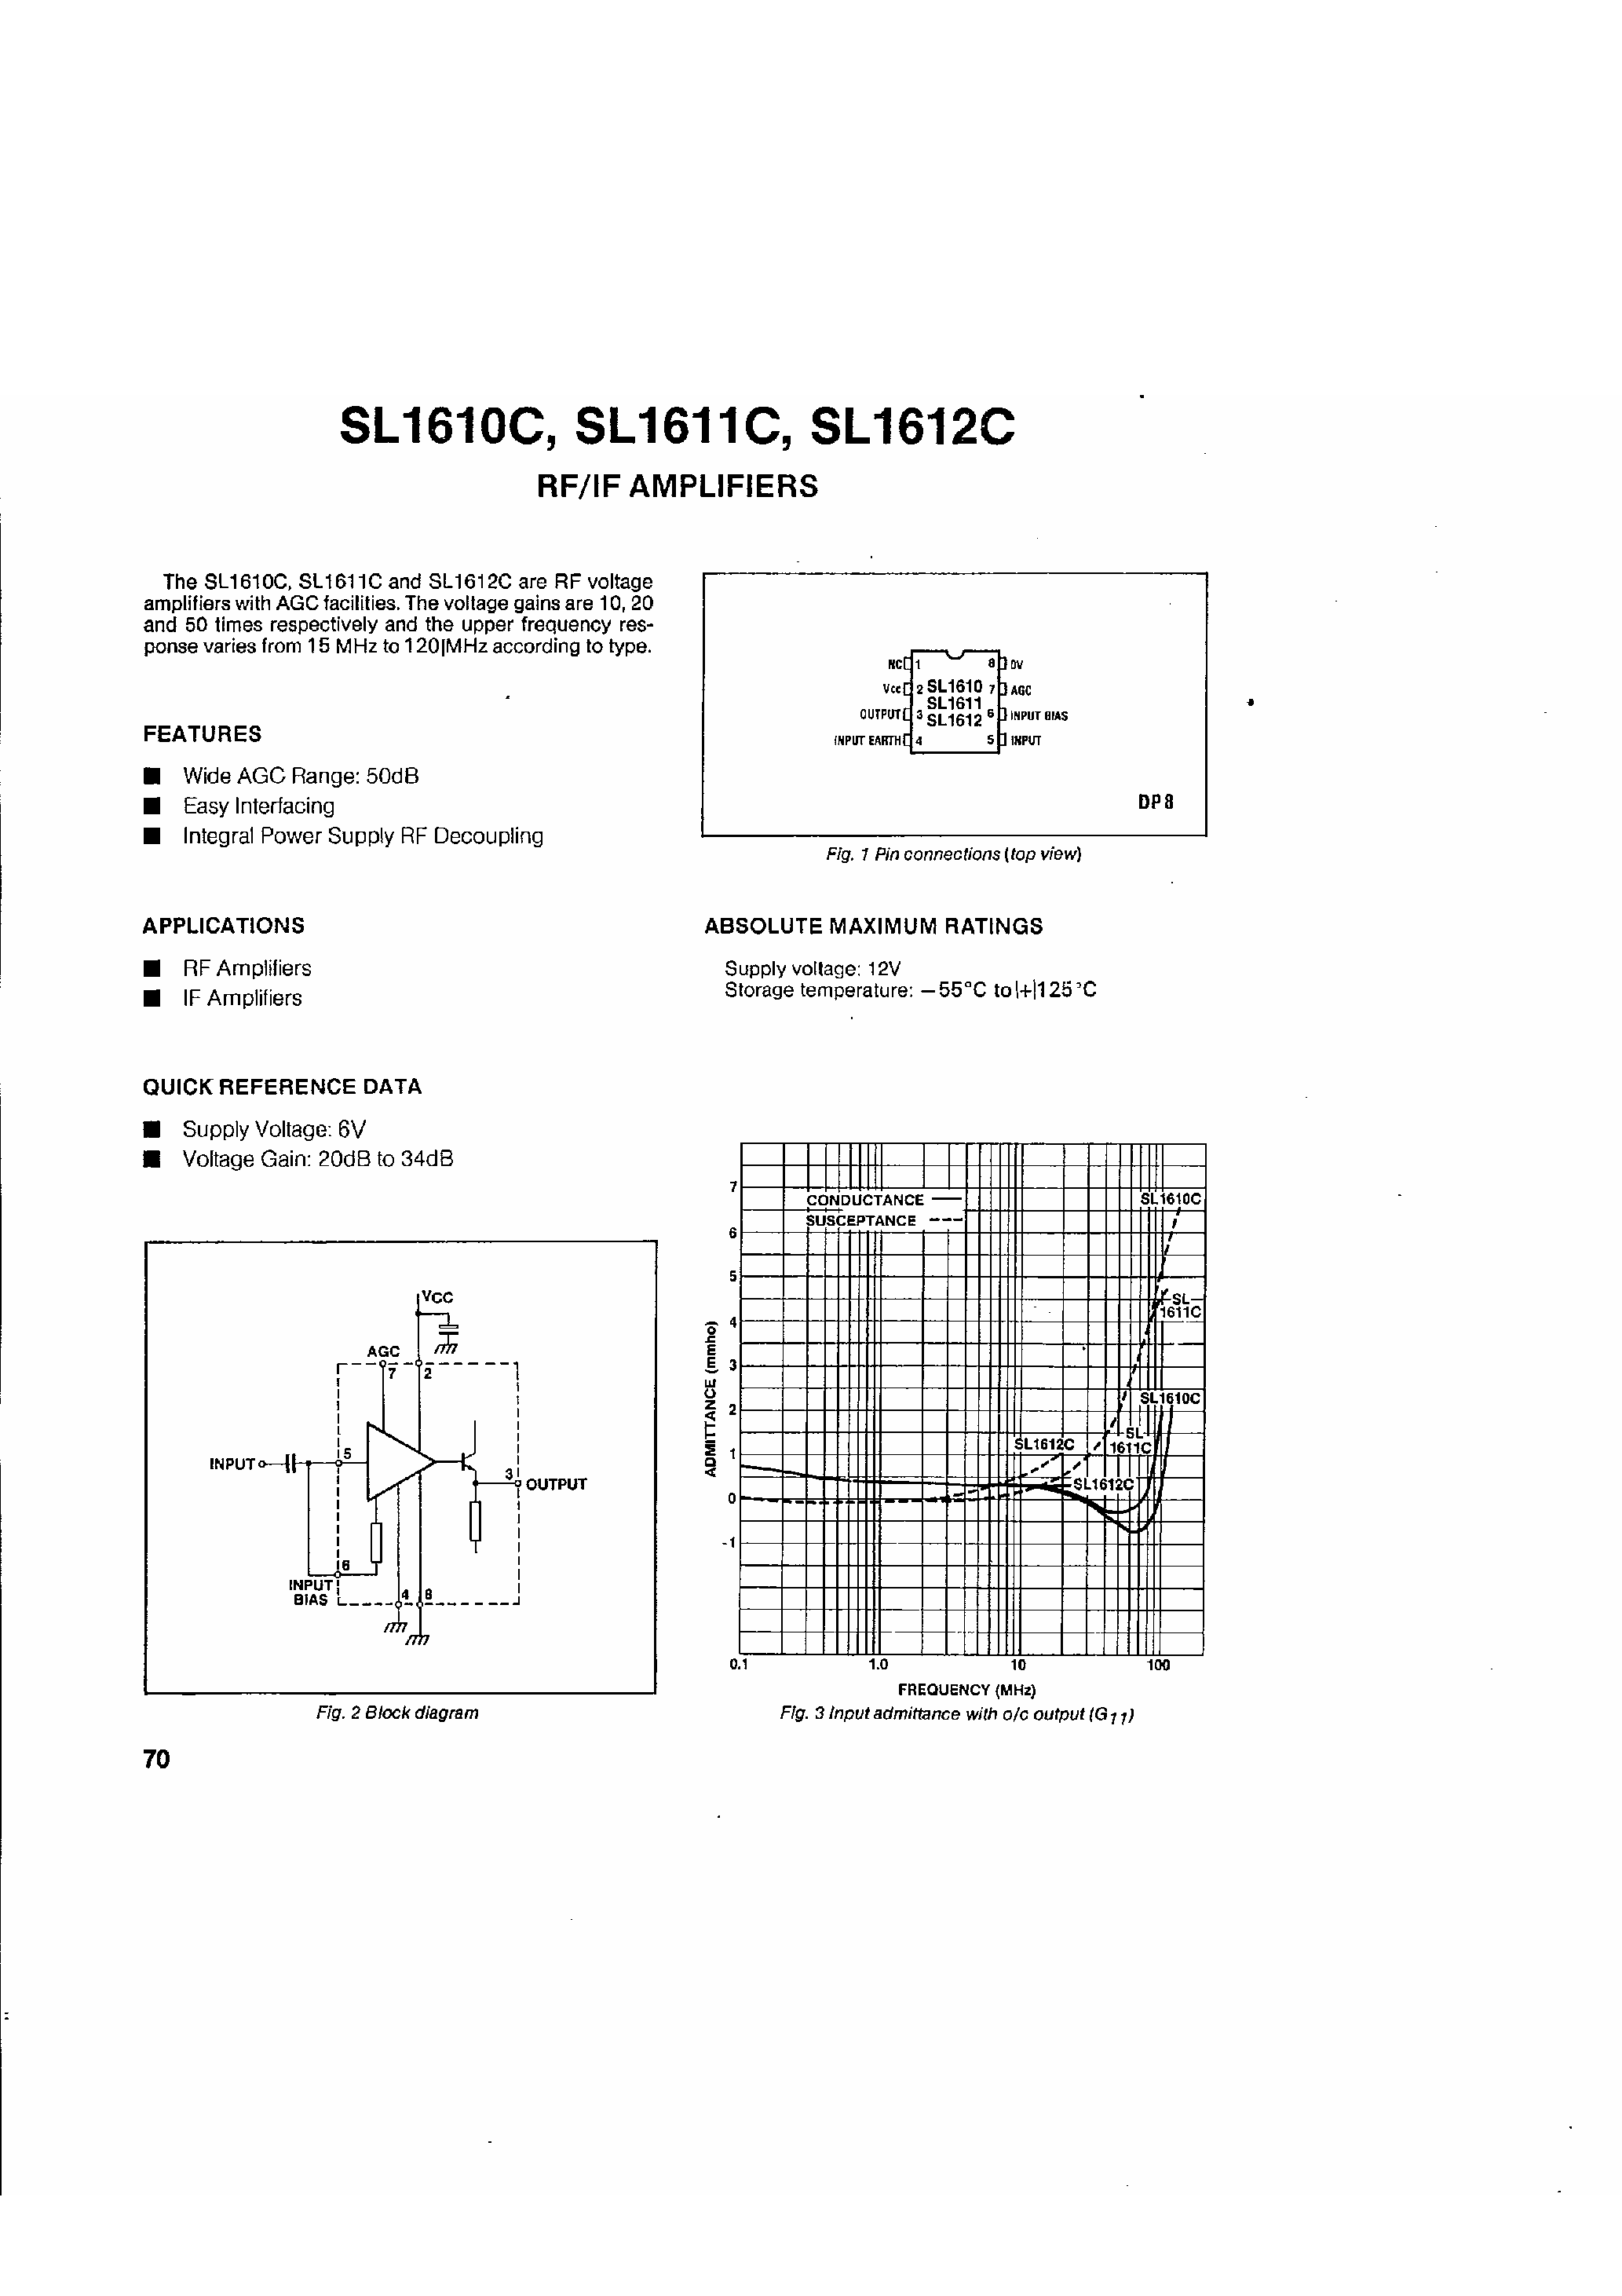 Datasheet SL1612C - (SL1611C/SL1611C) RF / IF Amplifiers page 1